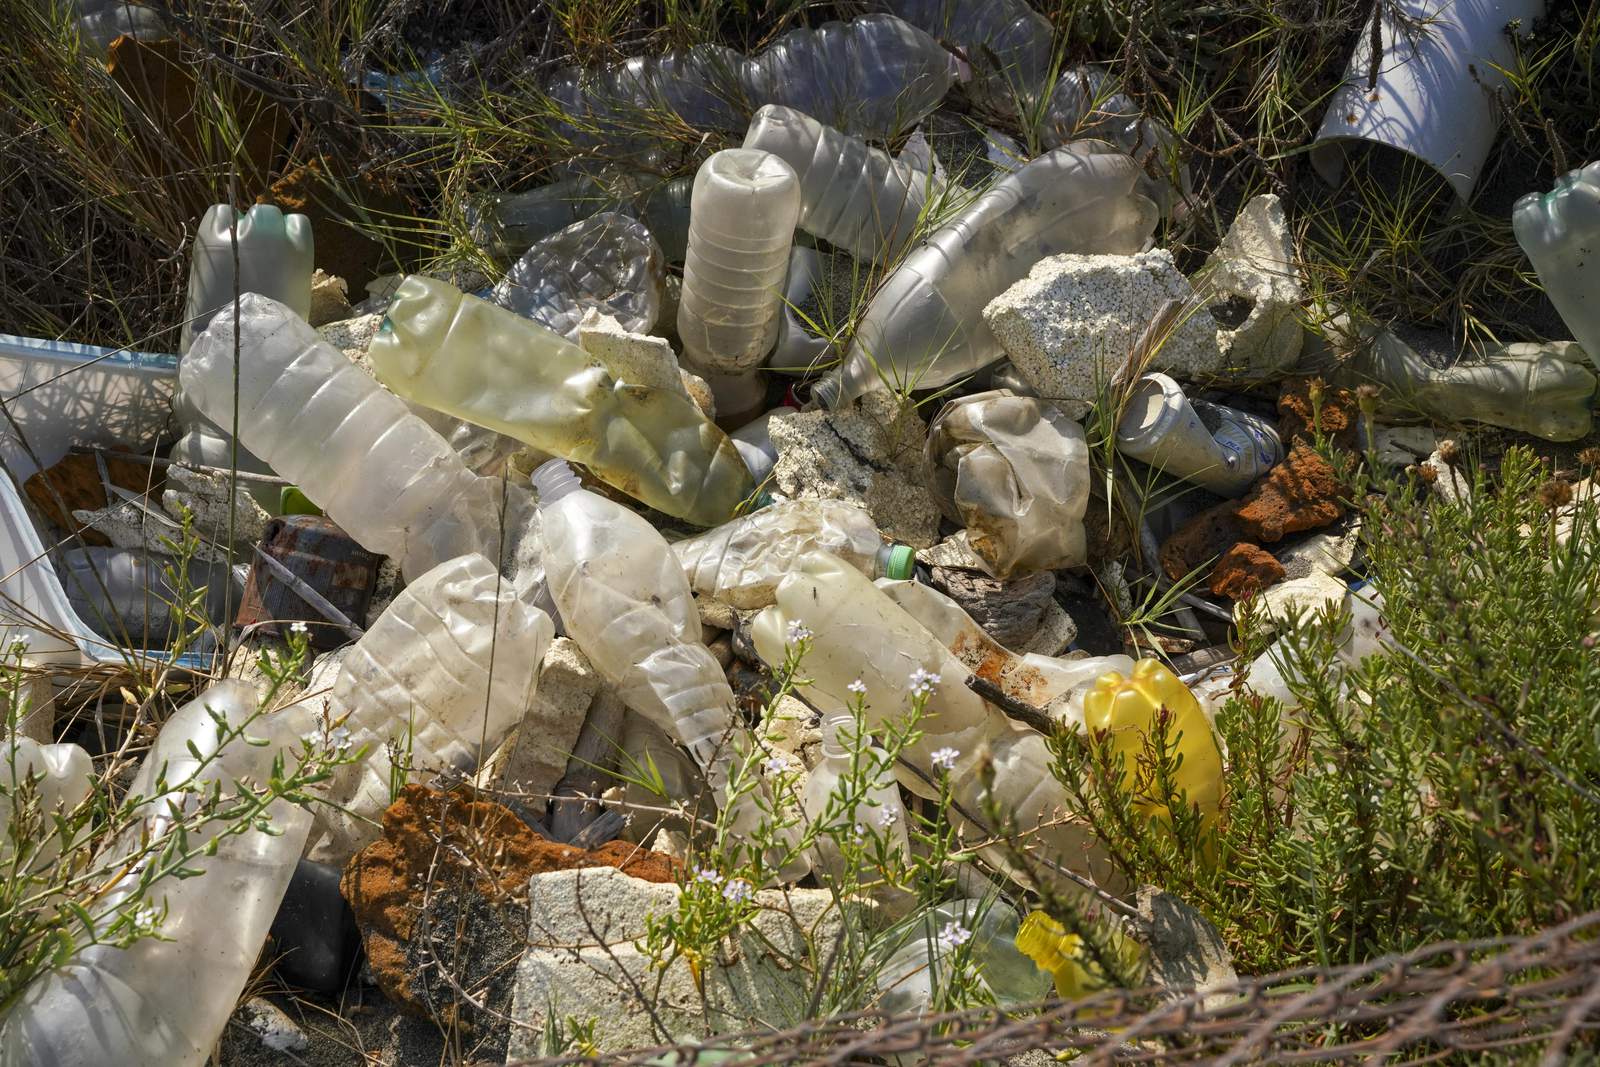 Mexico City ban on single-use plastics takes effect